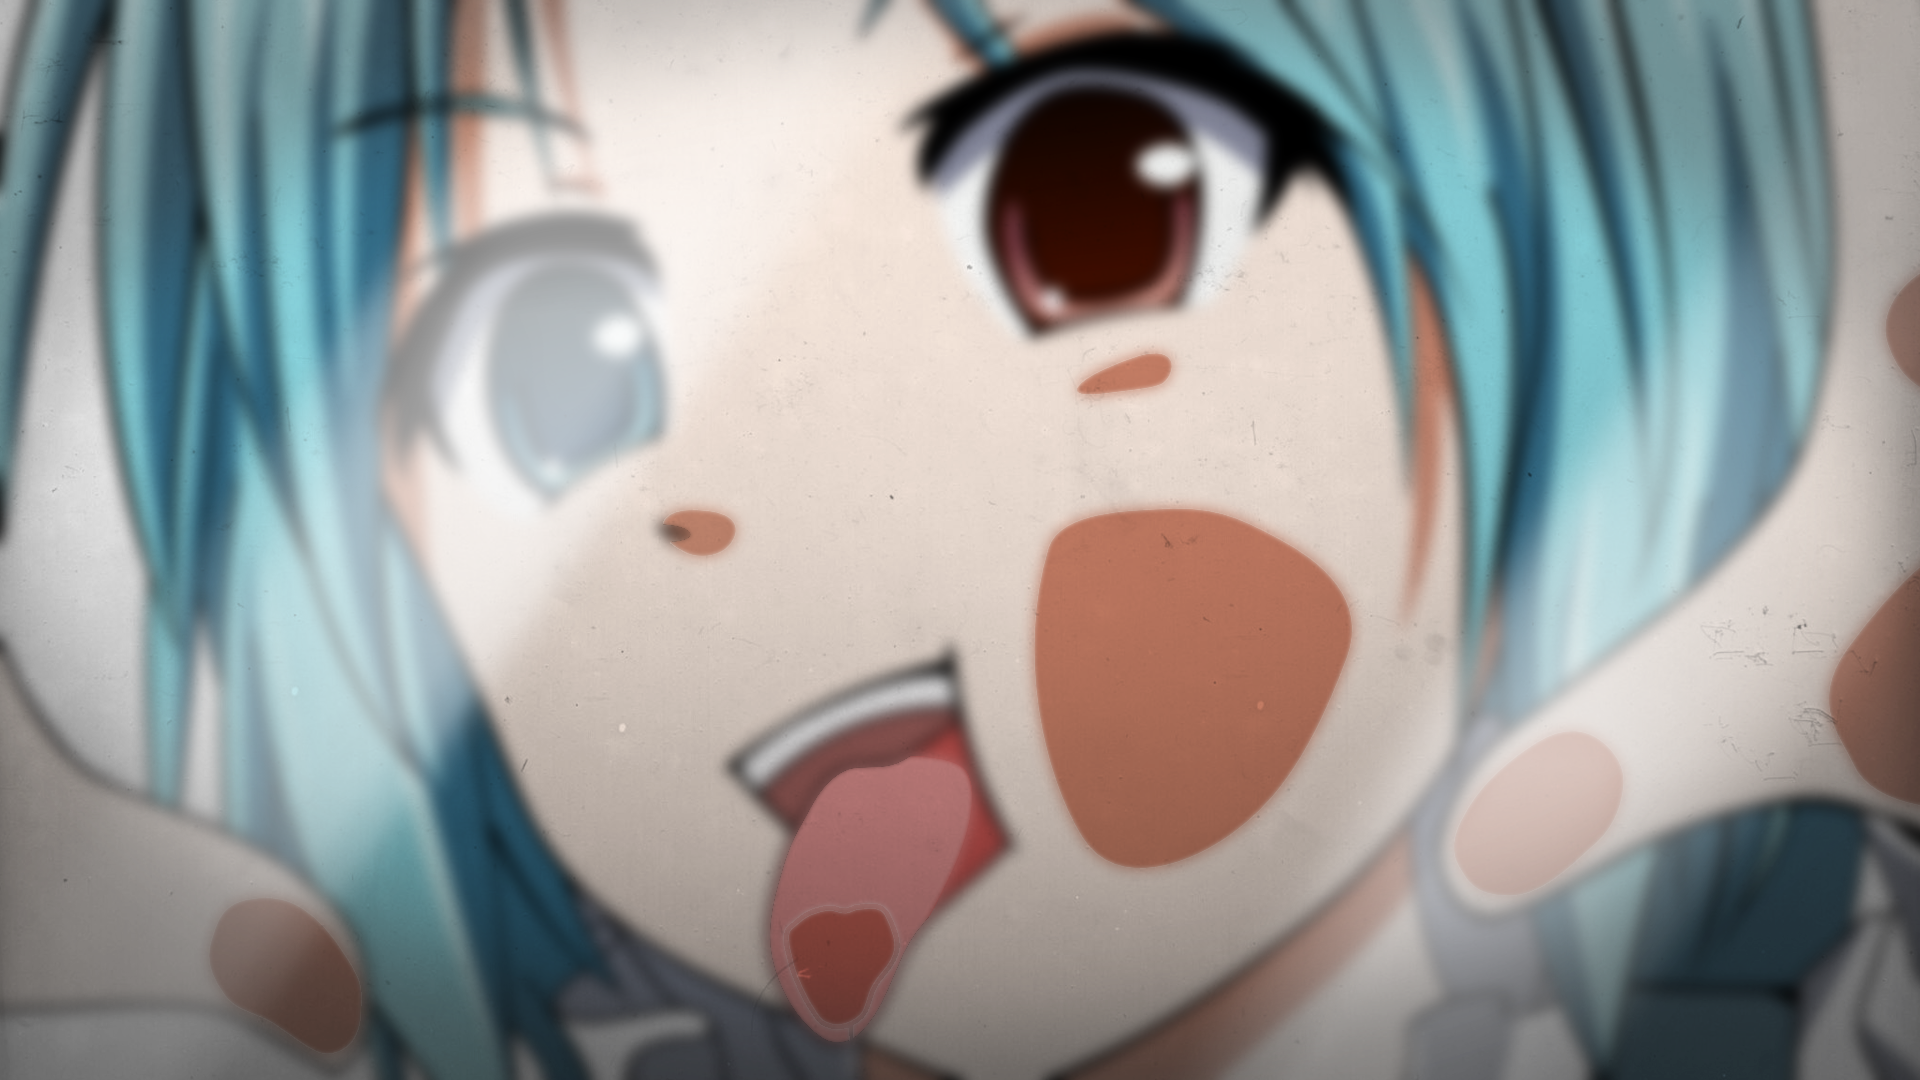 Anime 1920x1080 Touhou heterochromia Tatara Kogasa face cyan hair tongues tongue out against screen